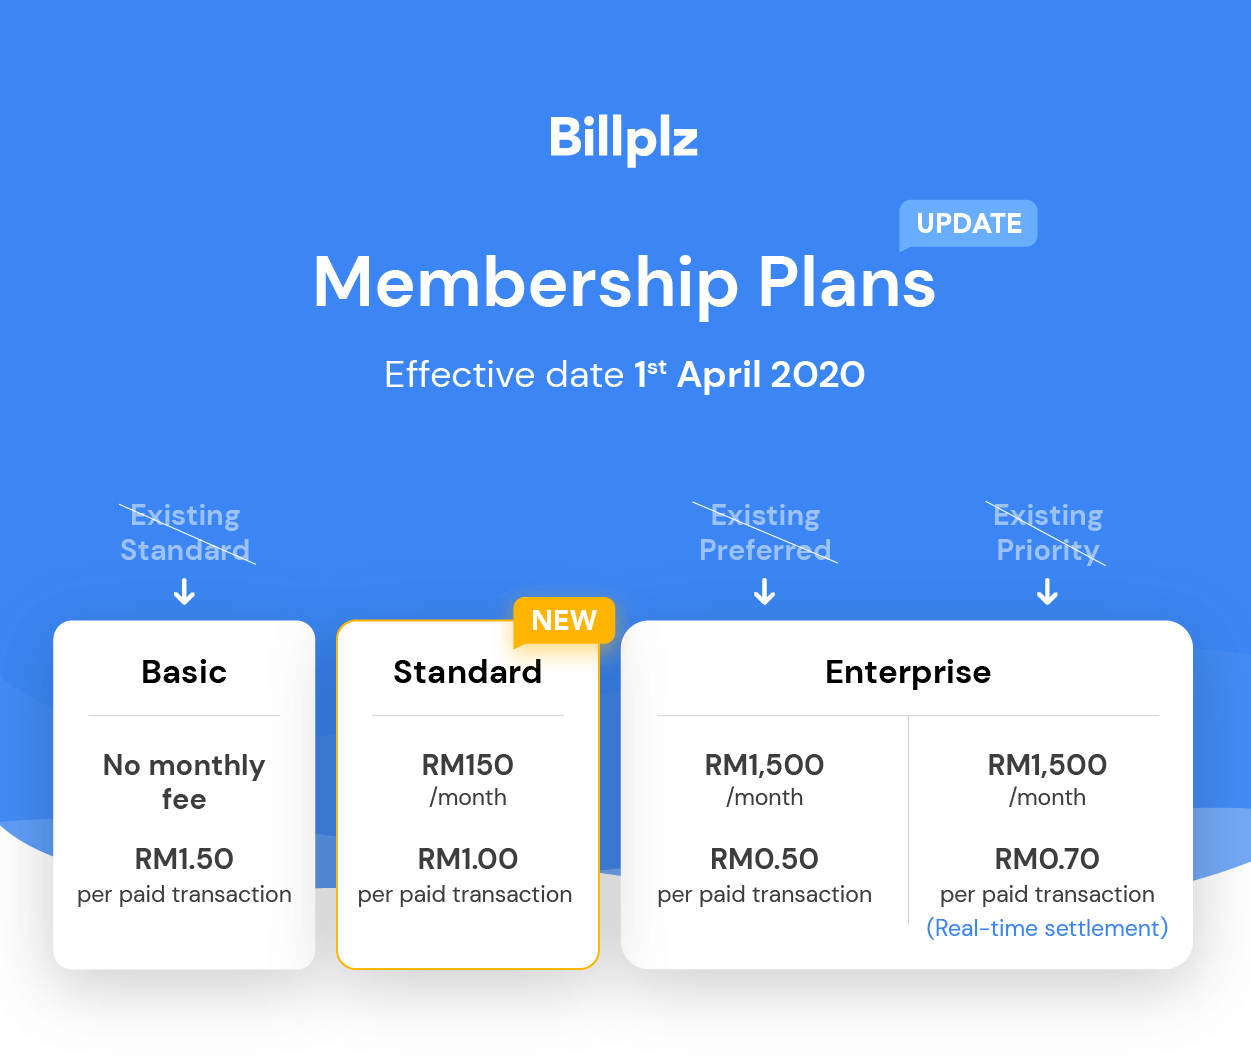 Update on Membership Plan